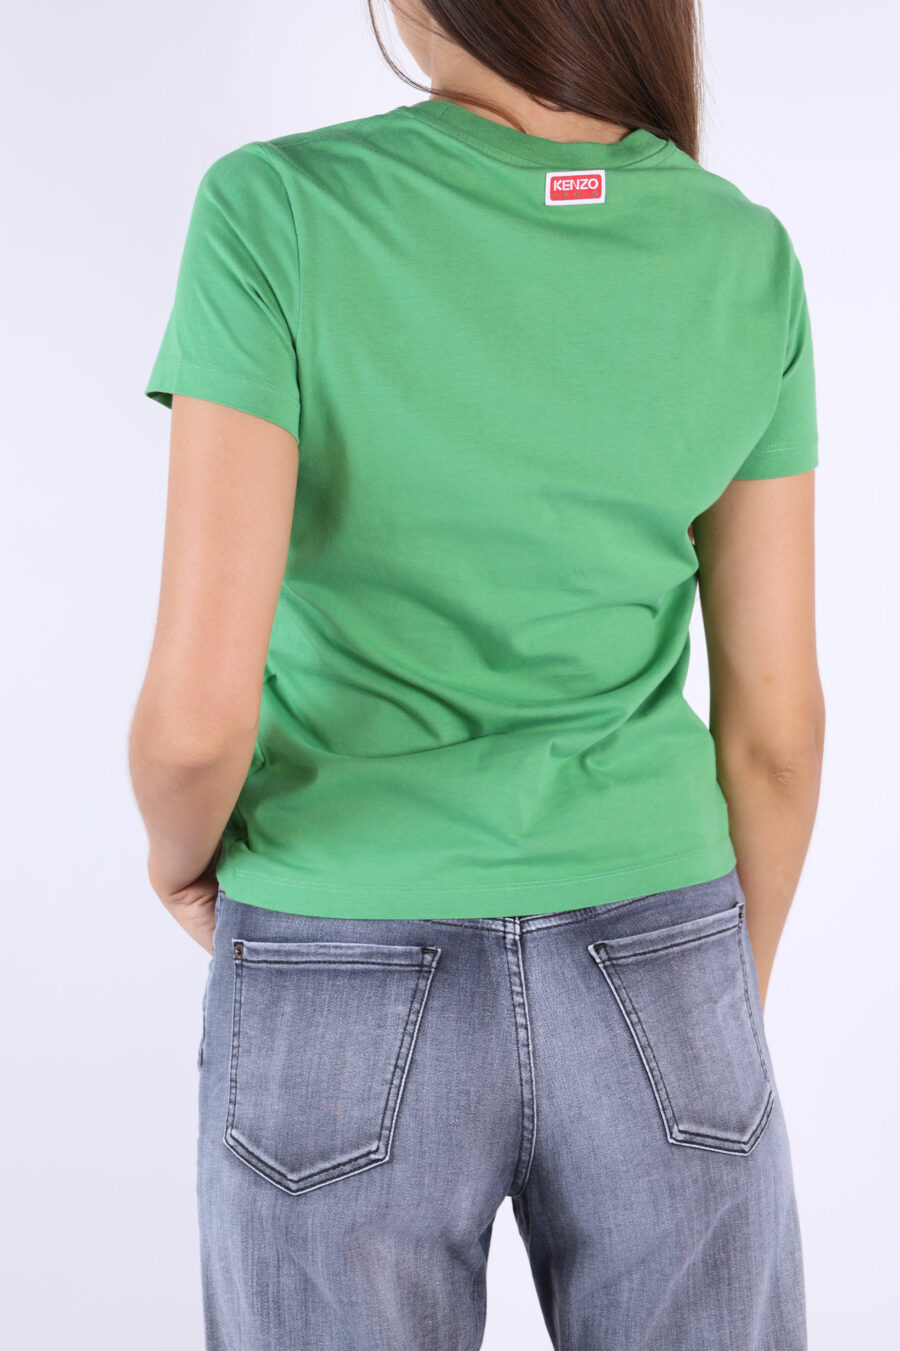 Camiseta verde con logo "tiger" bordado - 361223054662201997